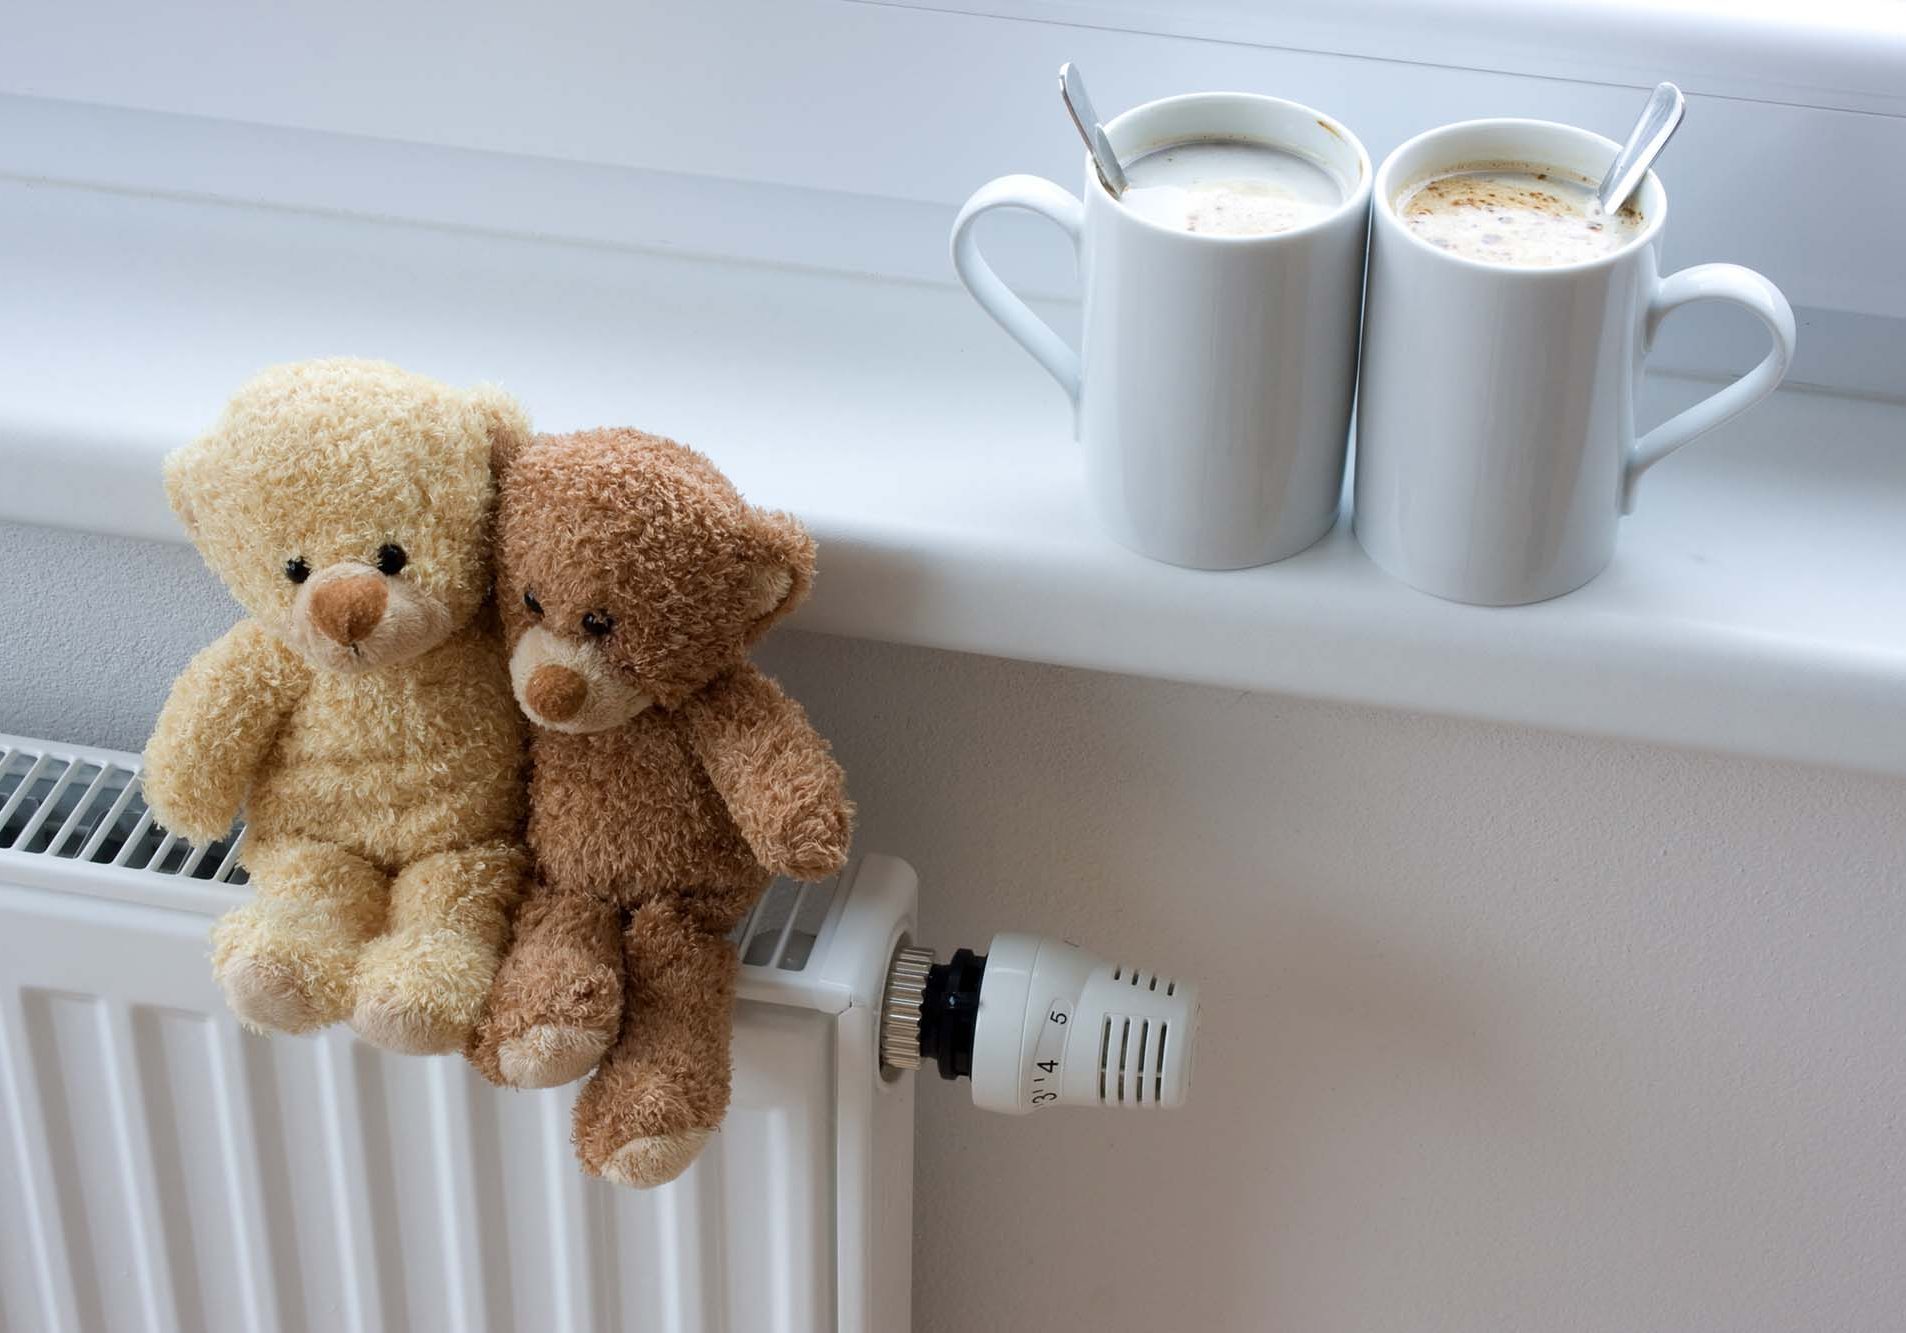 Two teddy bears sitting on radiator in home, with coffee cups on windowsill